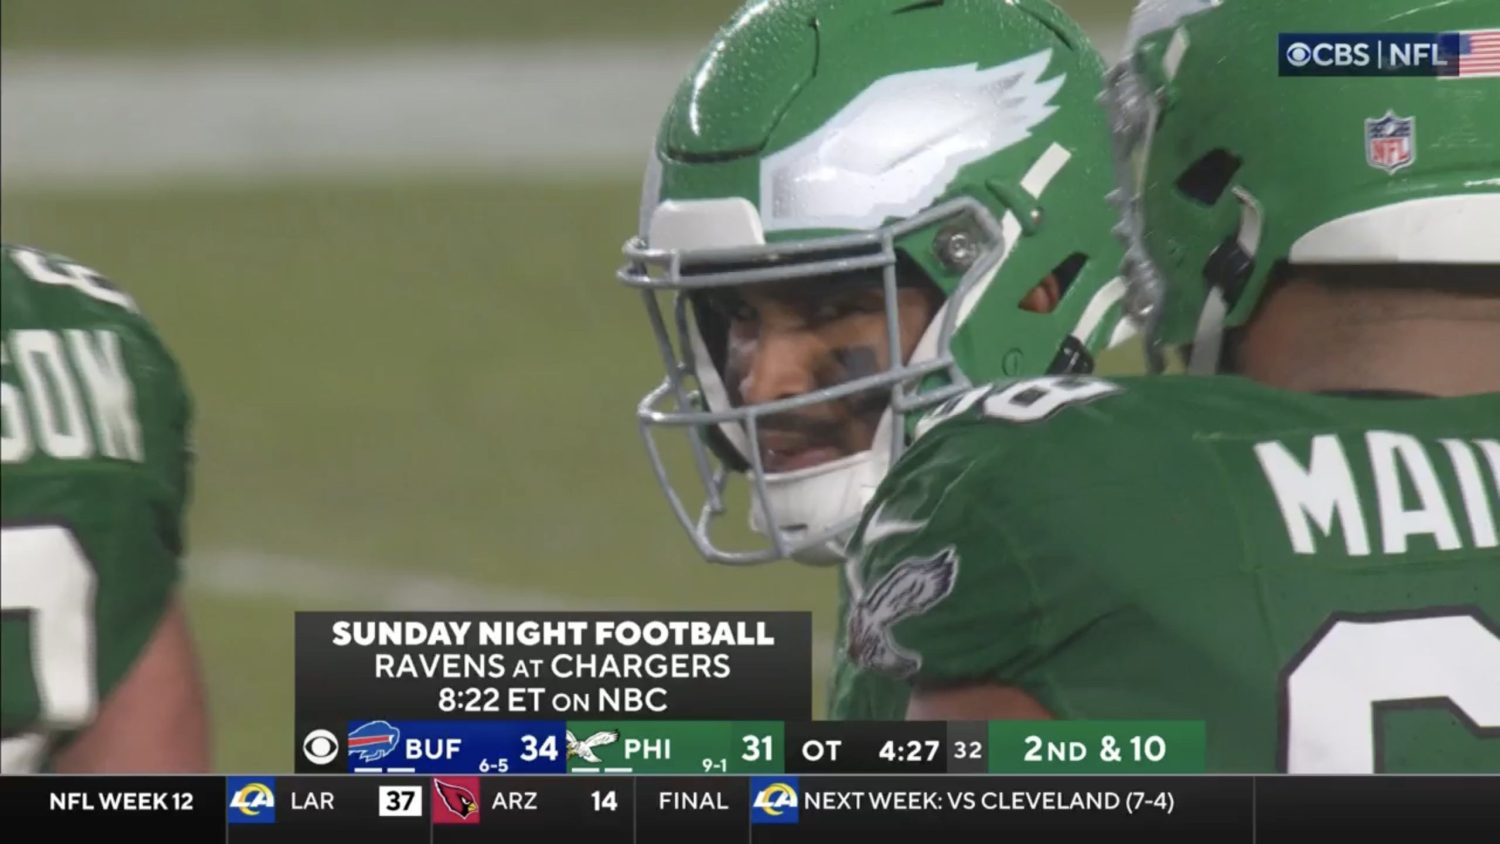 NBC Sunday Night Football promo during NFL on CBS